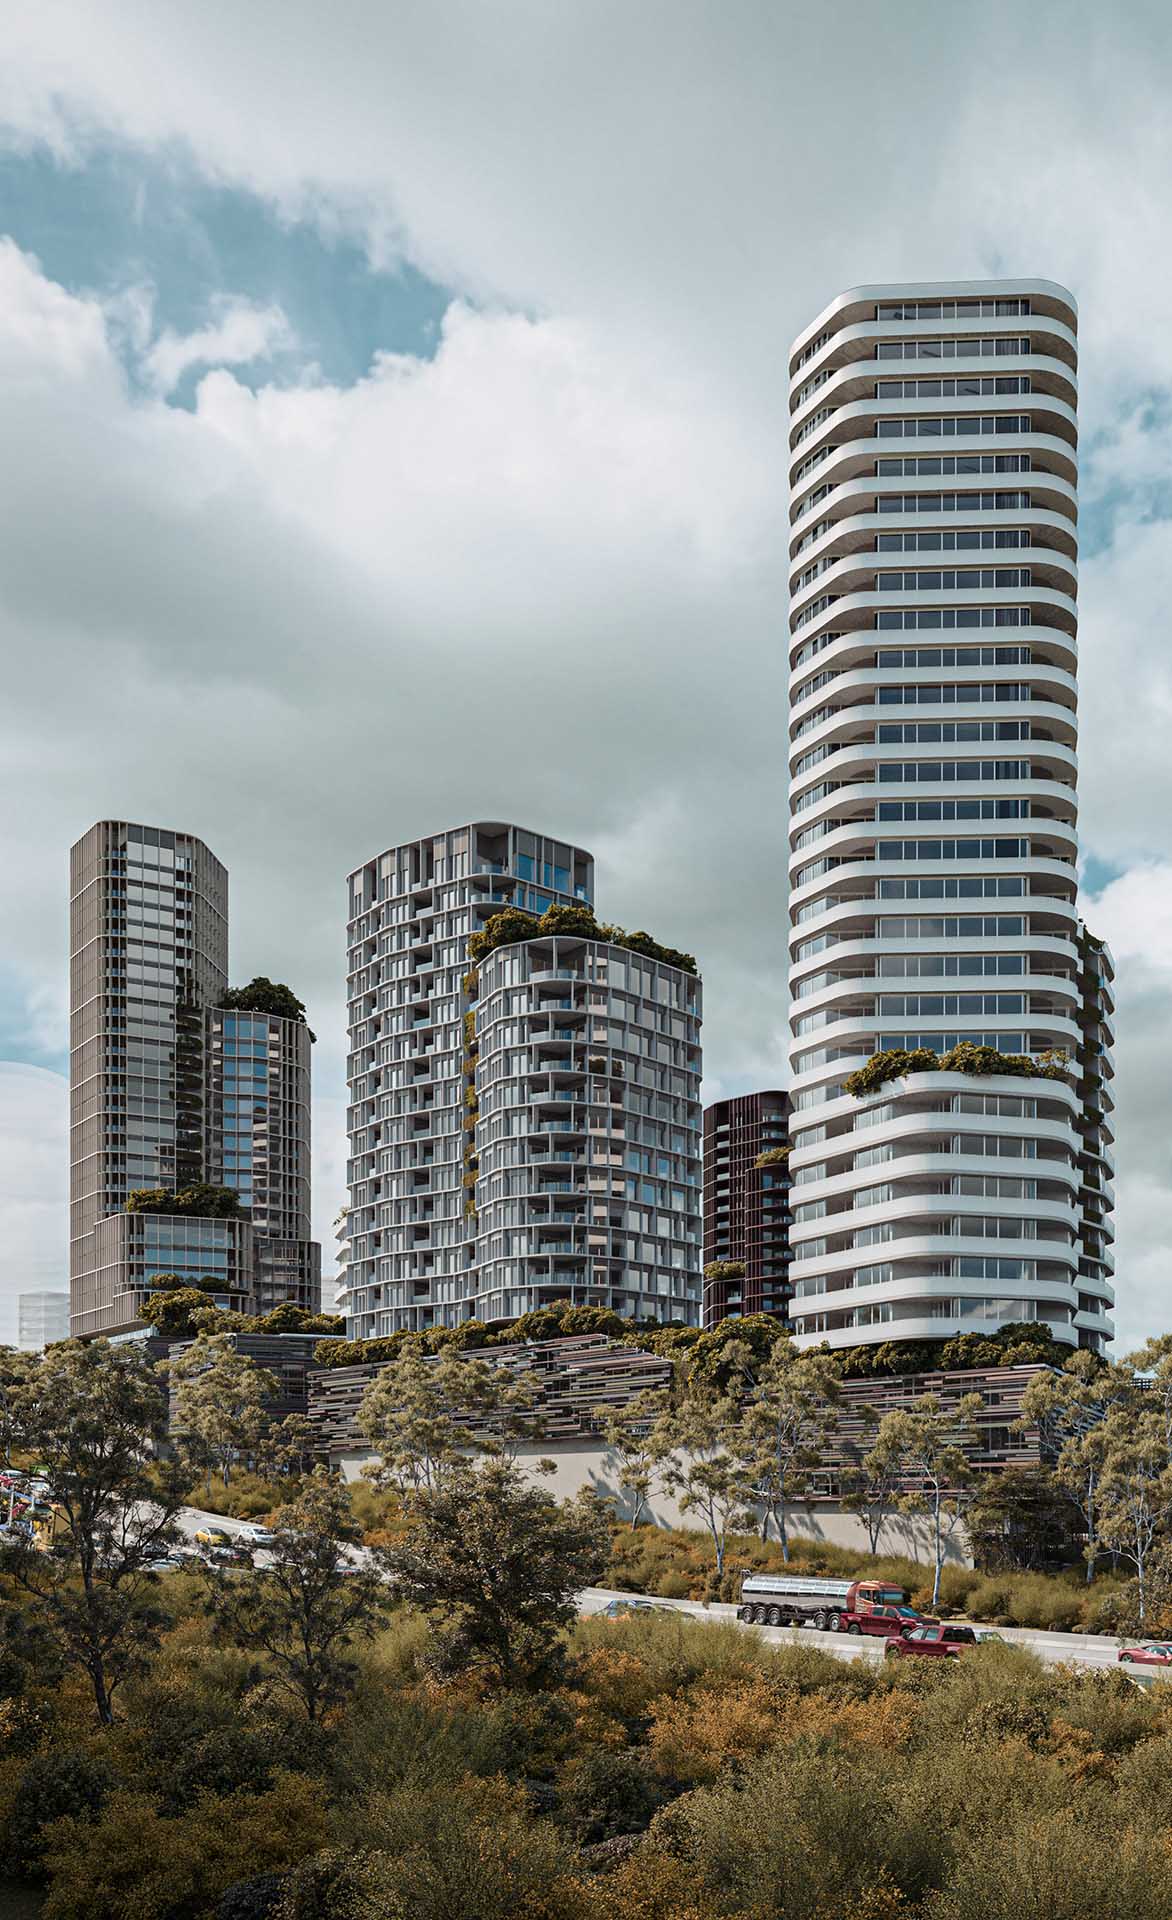 Multi-level residential building in Sydney